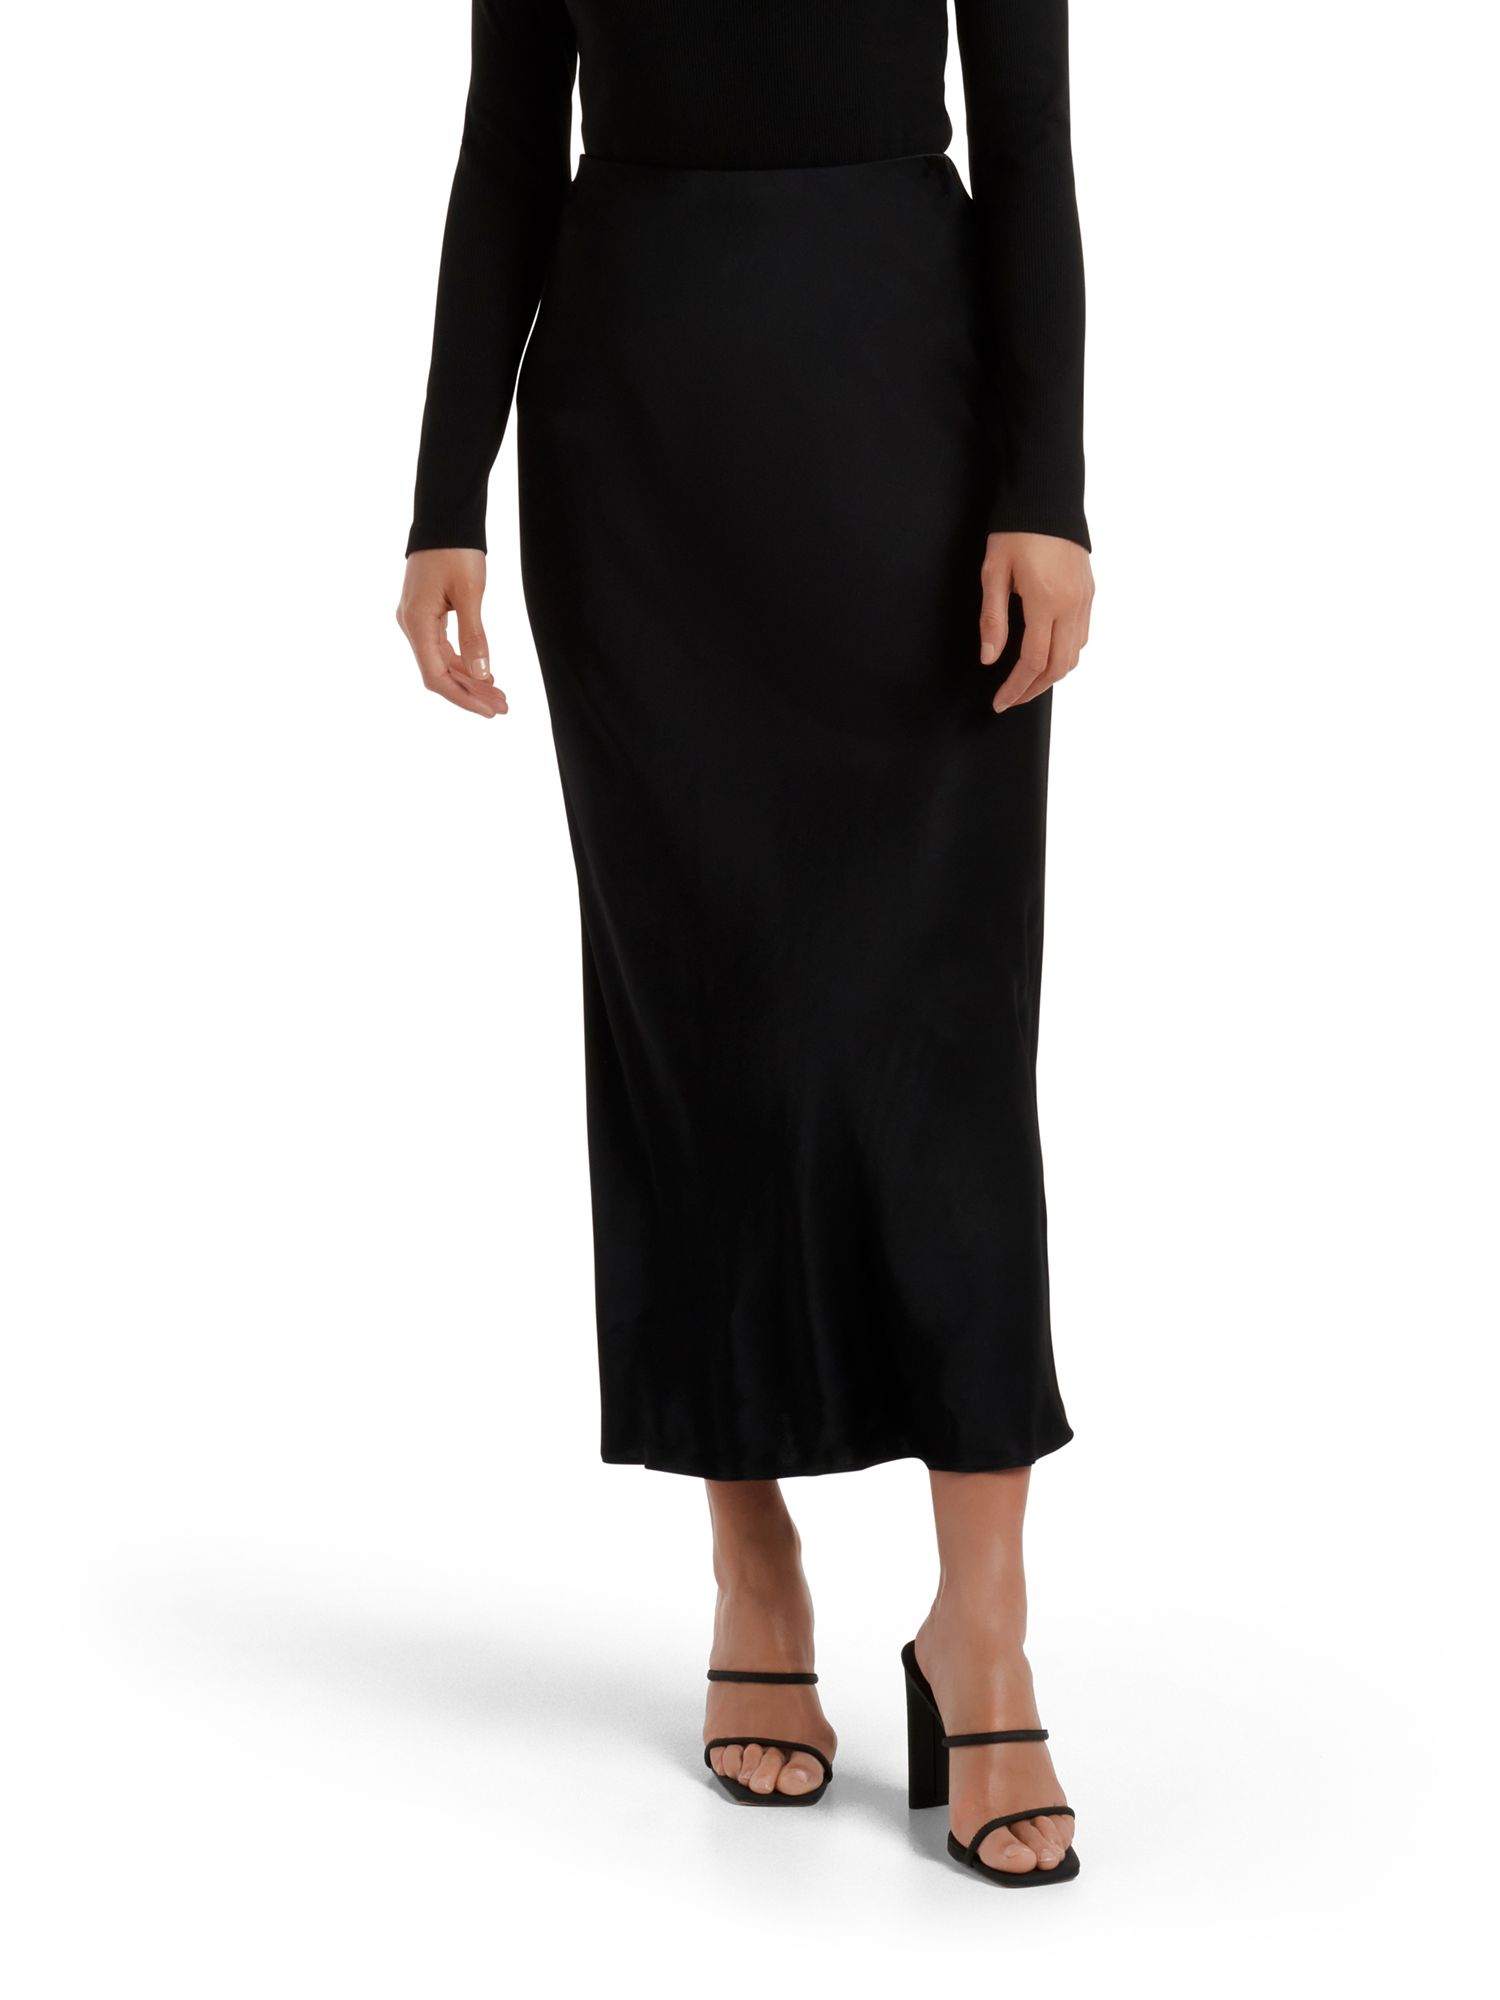 Forever New Portia Bias Satin Midi Skirt, Black at John Lewis & Partners